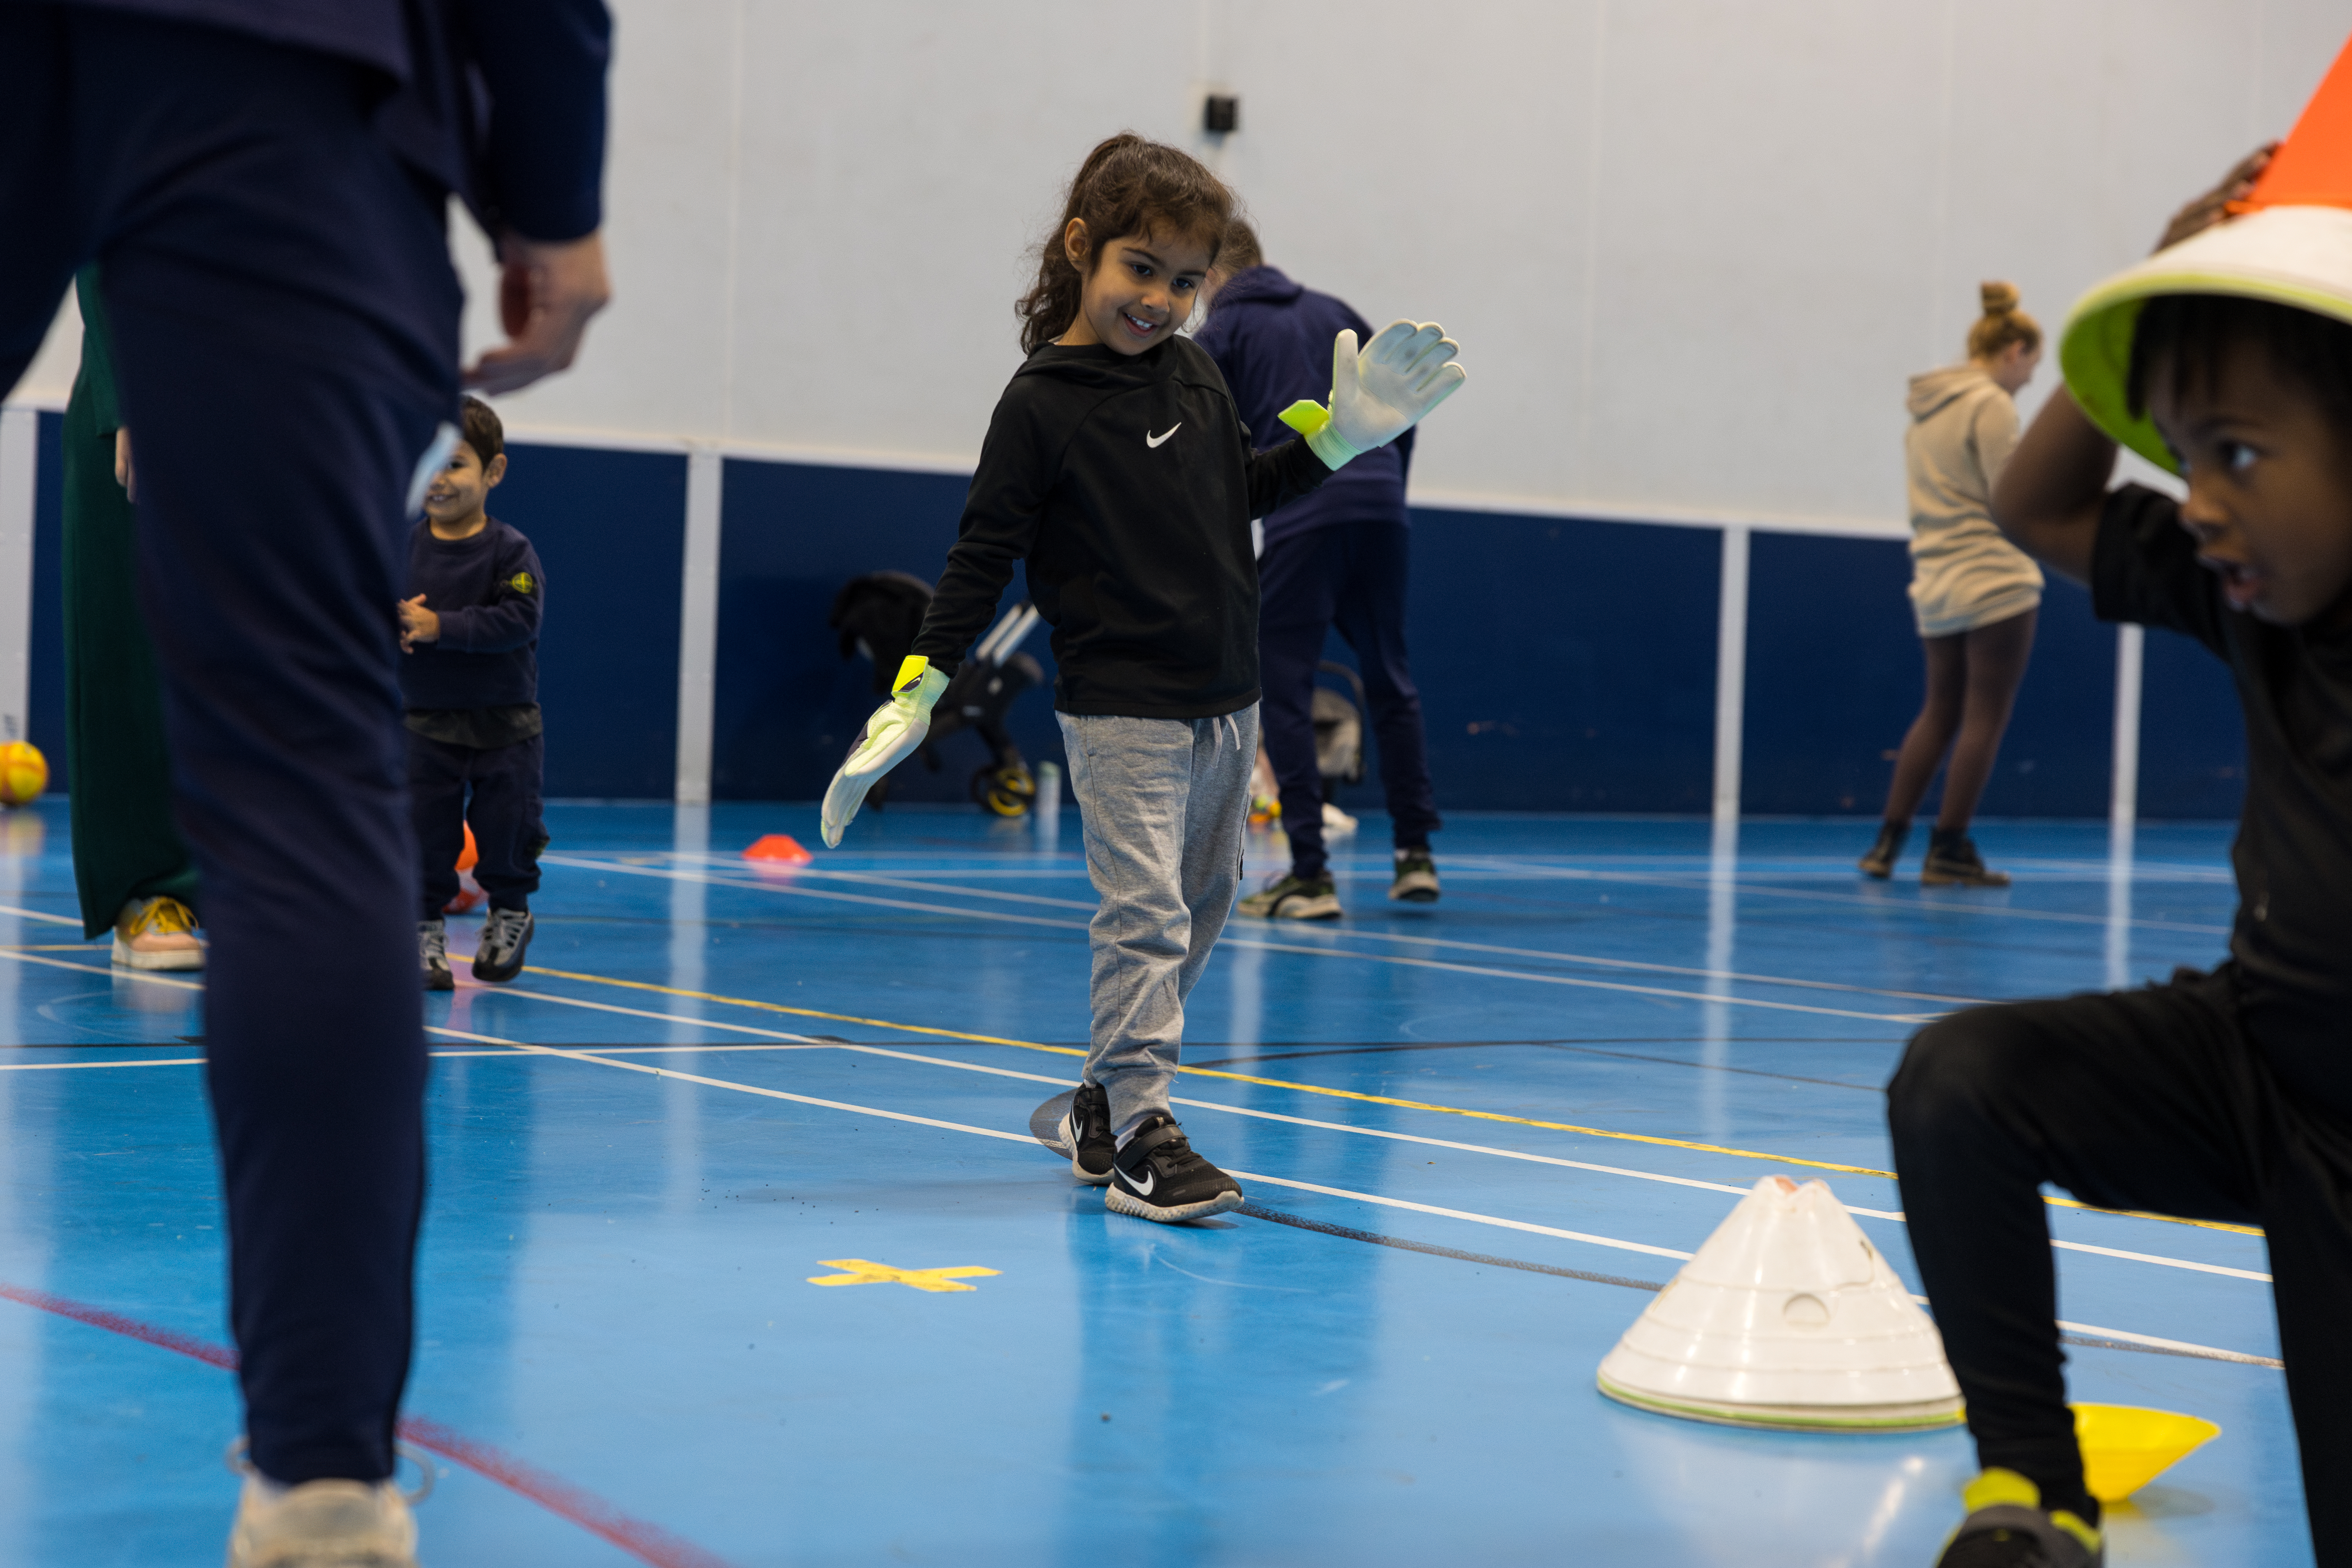 Khadija walks forwards on the blue sports hall surface wearing her goalkeeper gloves.